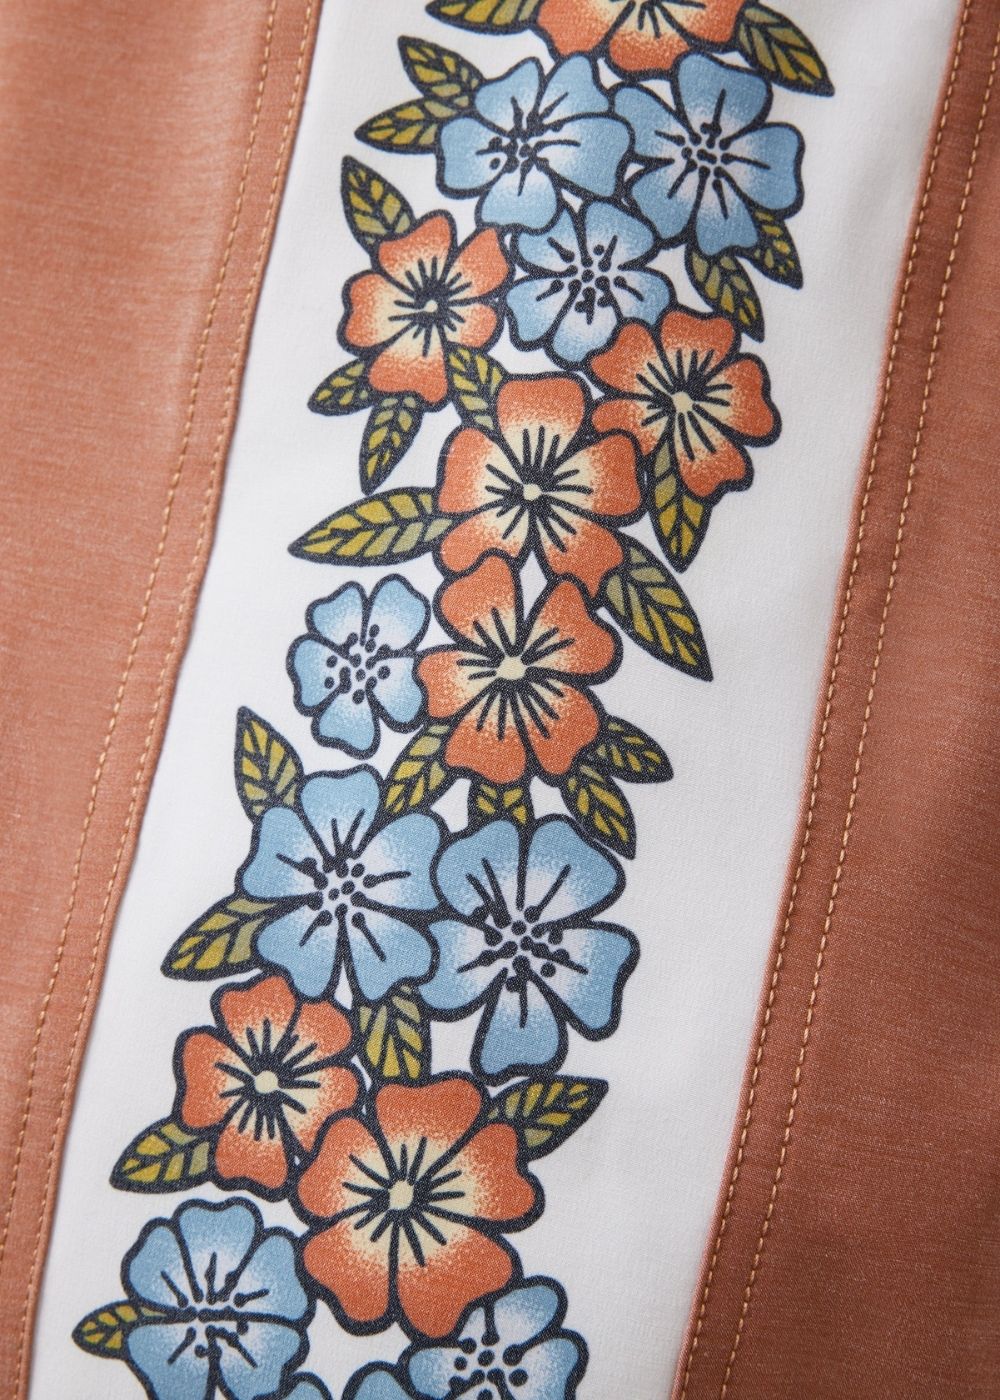 Vine Trunk - מכנסי גלישה עם דוגמאת פרחים בצד